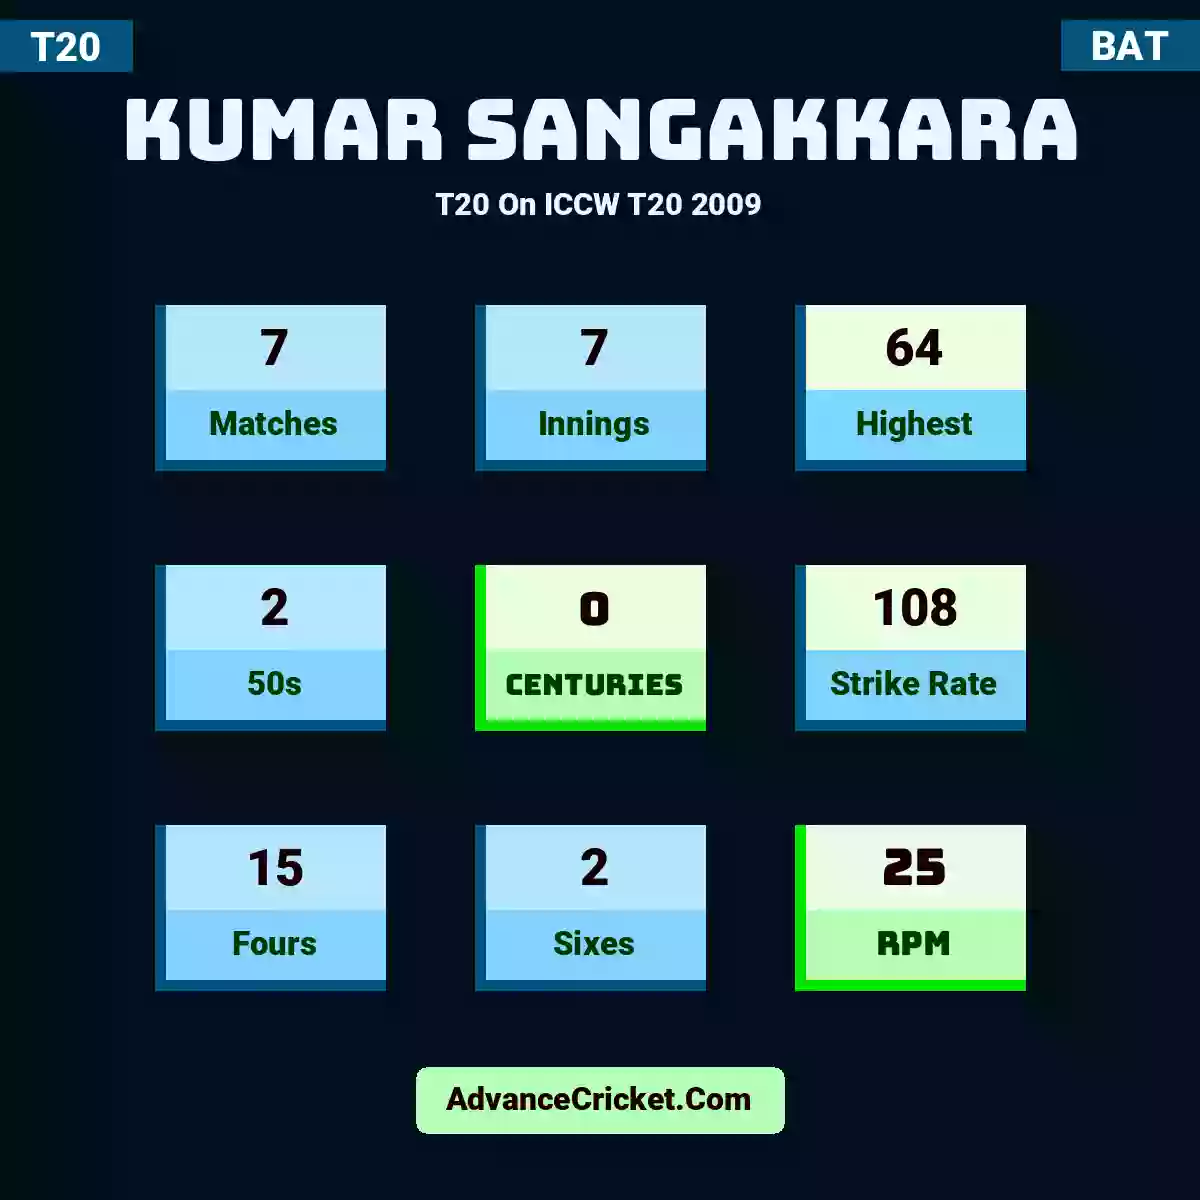 Kumar Sangakkara T20  On ICCW T20 2009, Kumar Sangakkara played 7 matches, scored 64 runs as highest, 2 half-centuries, and 0 centuries, with a strike rate of 108. K.Sangakkara hit 15 fours and 2 sixes, with an RPM of 25.